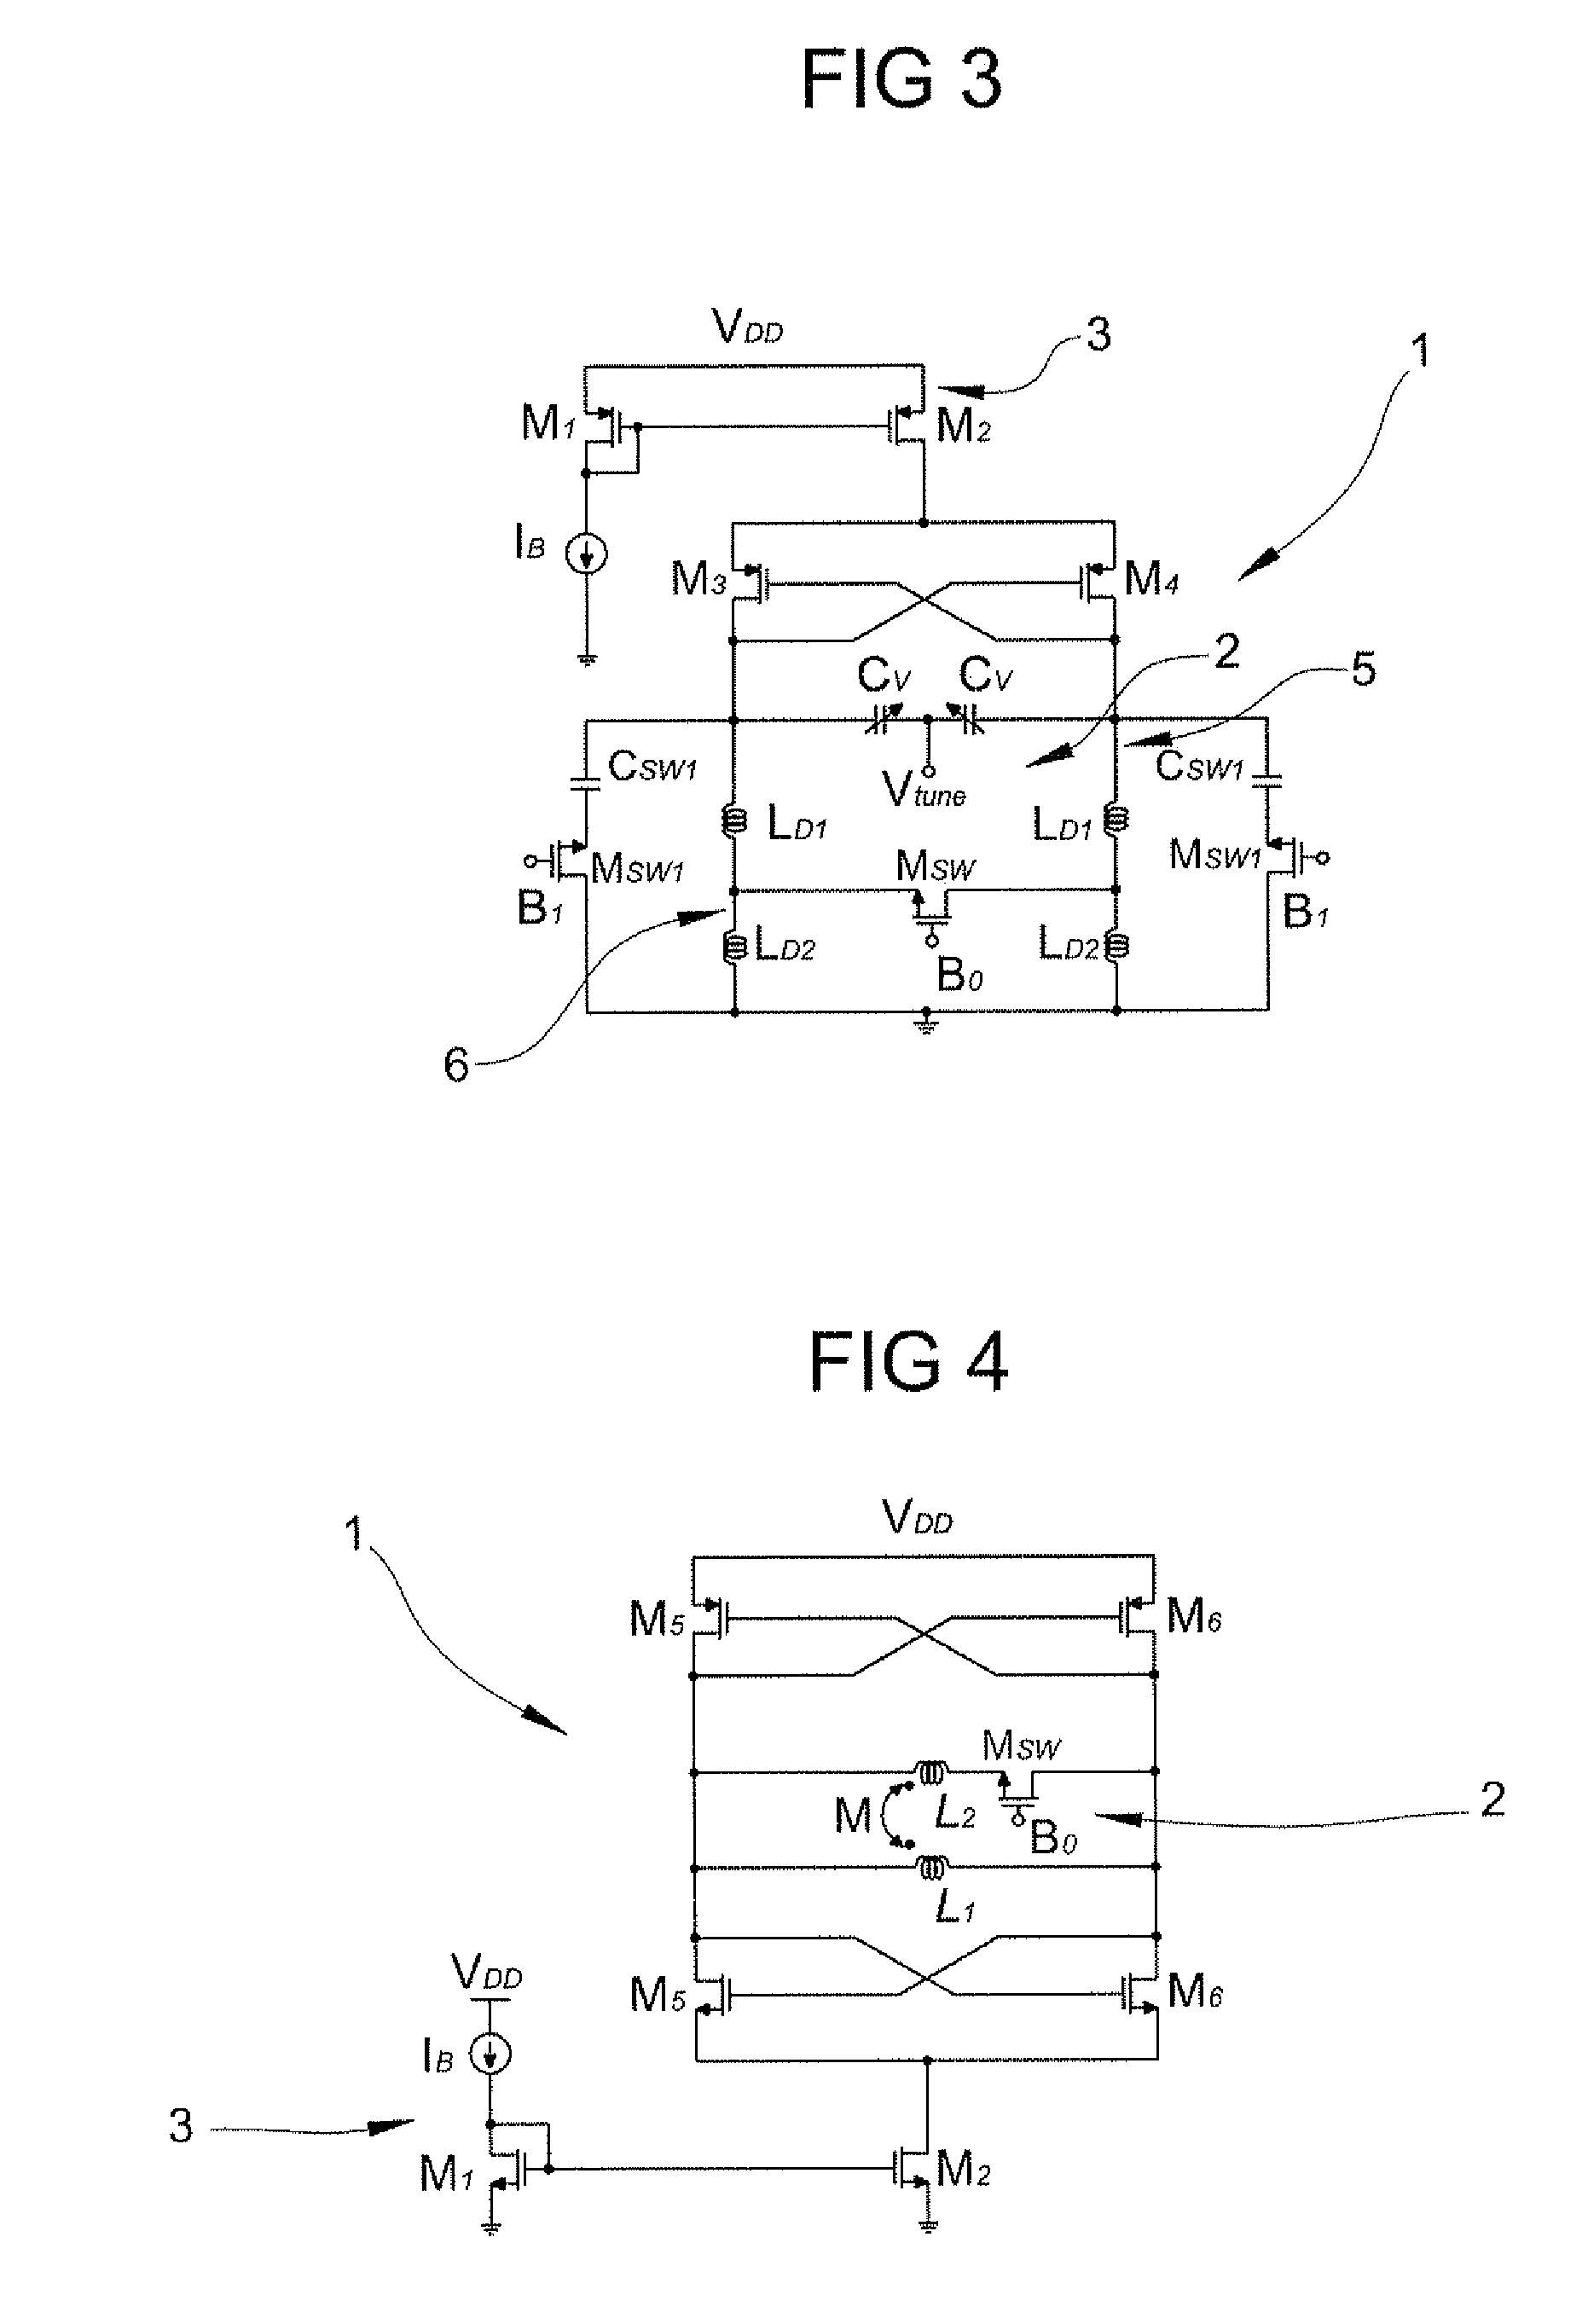 Circuit arrangement of a voltage controlled oscillator